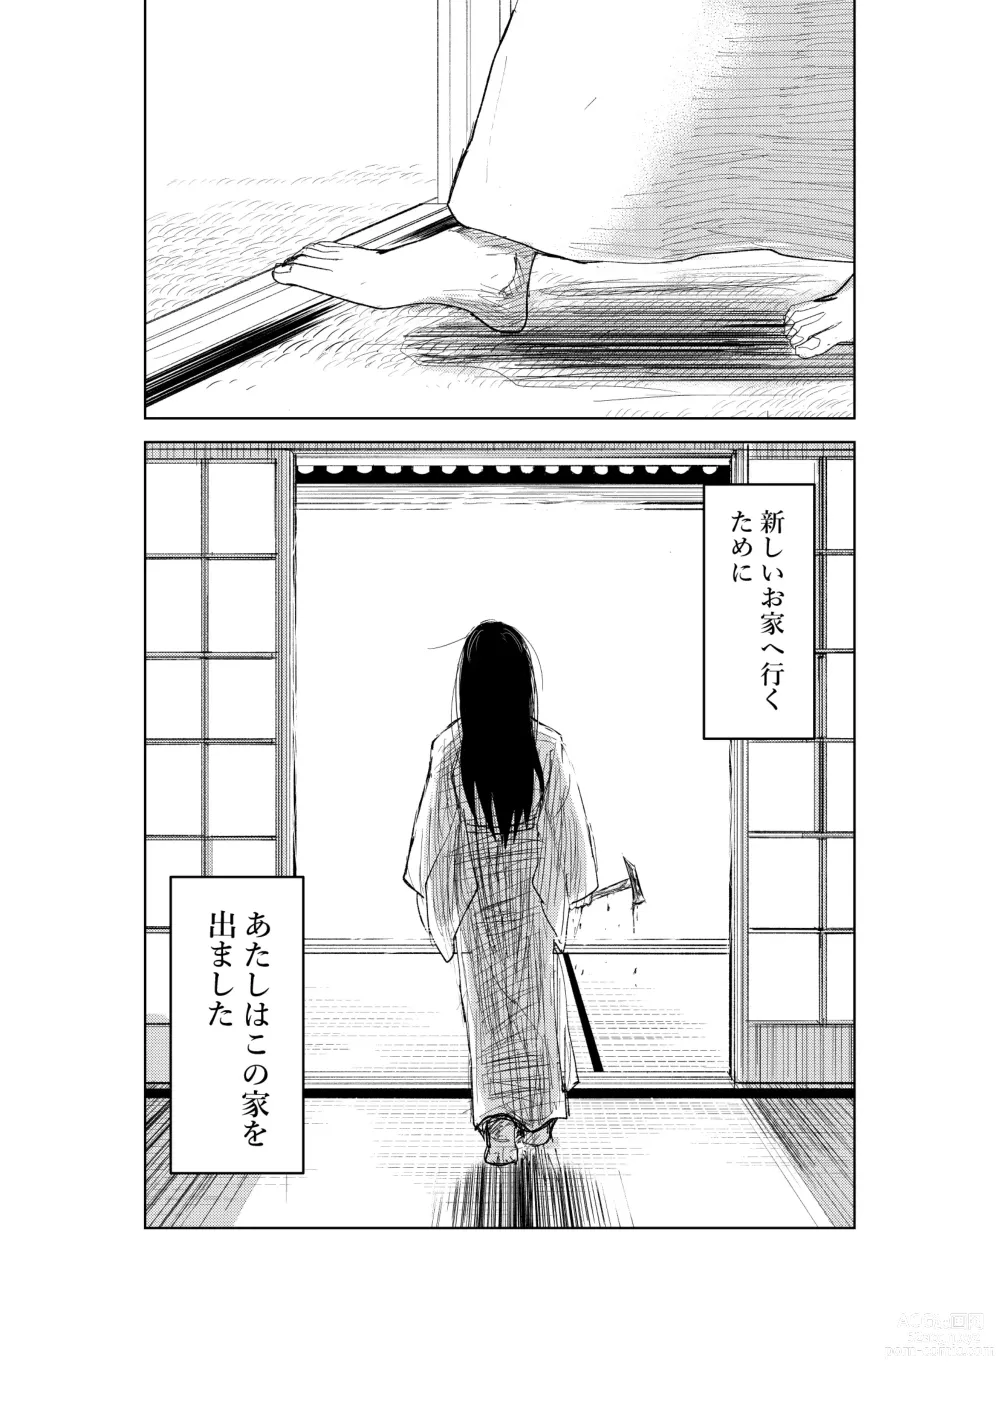 Page 41 of doujinshi Zashikiwarashi